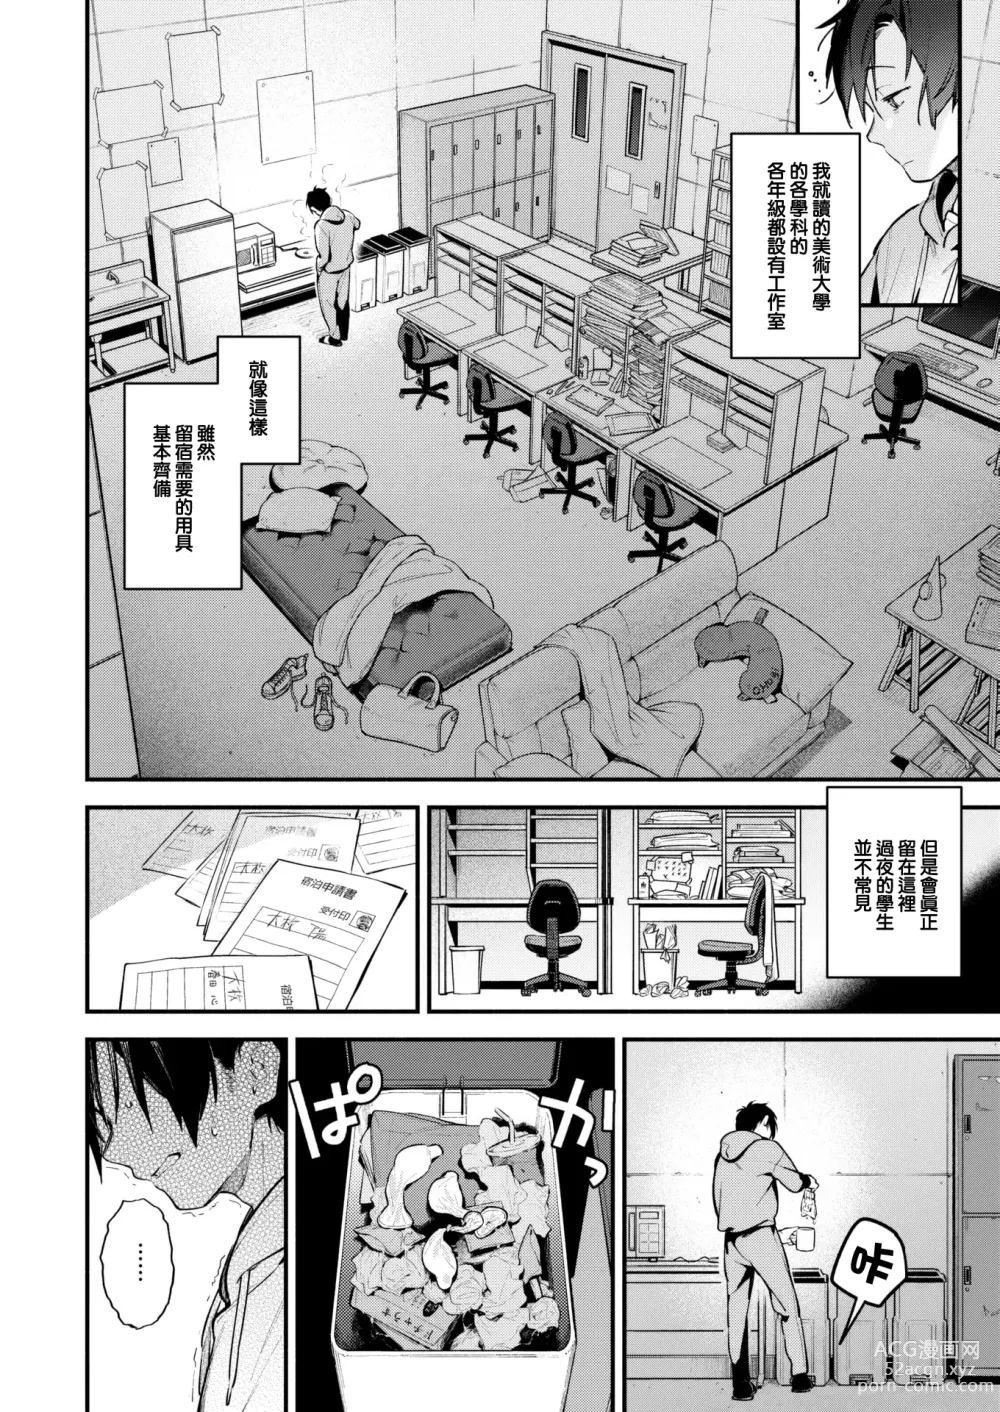 Page 3 of manga Latelier (decensored)